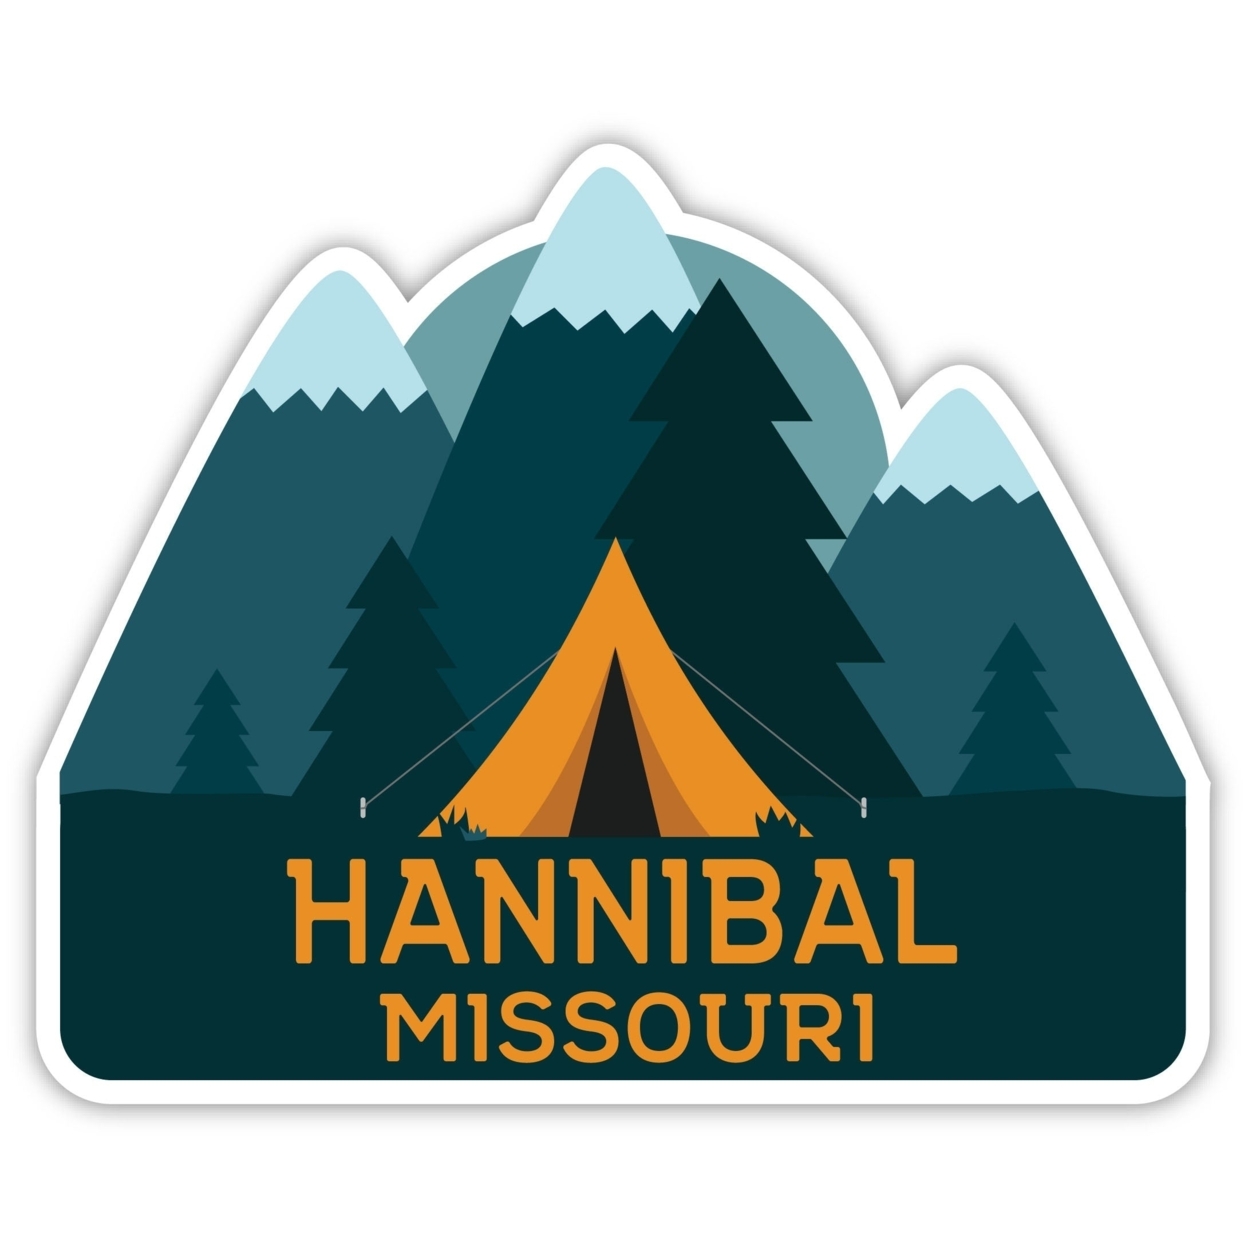 Hannibal Missouri Souvenir Decorative Stickers (Choose Theme And Size) - Single Unit, 10-Inch, Adventures Awaits